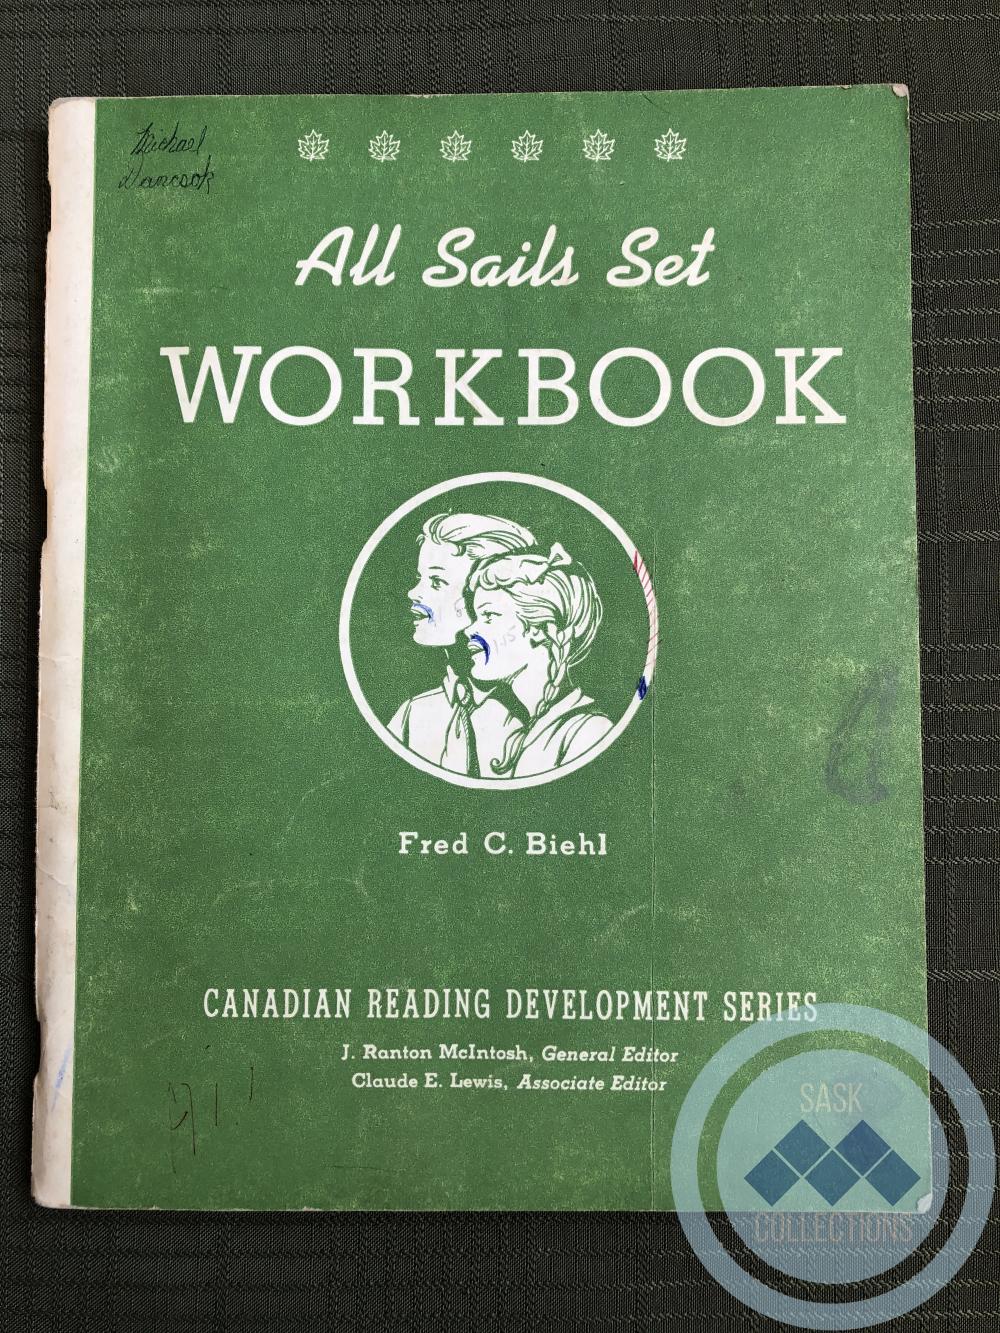 Workbook - All Sails Set